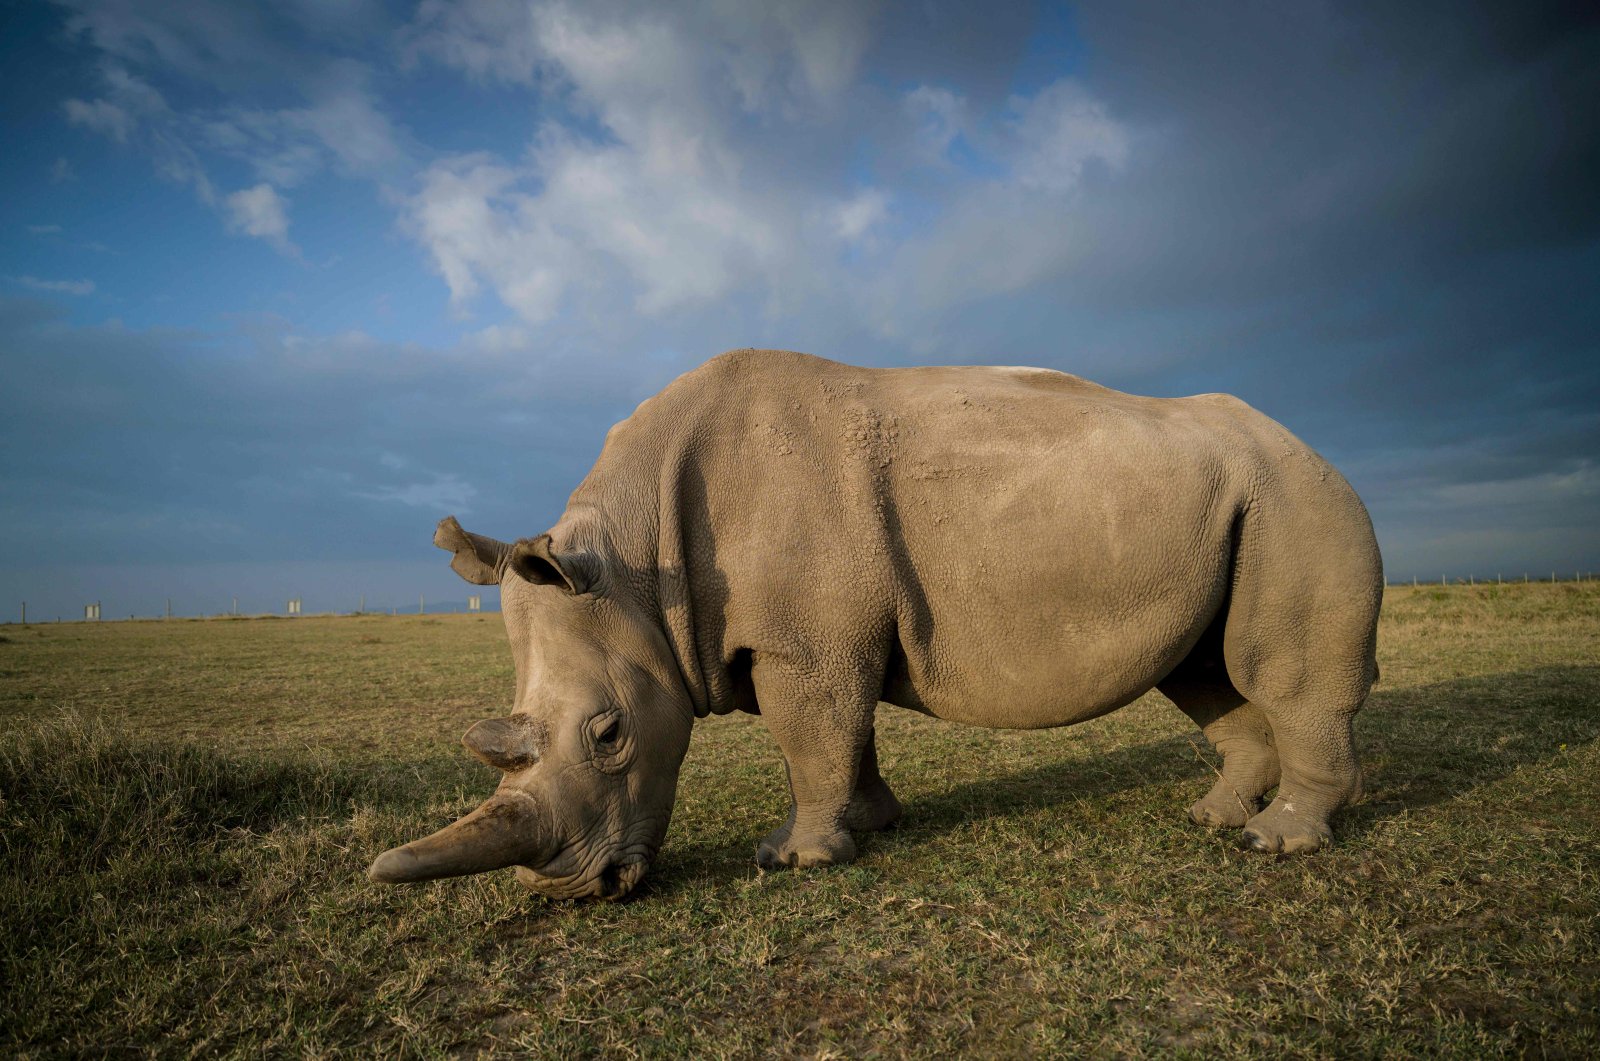 Istanbul artist’s exhibit illuminates rhinos’ plight with multimedia, scents | Daily Sabah